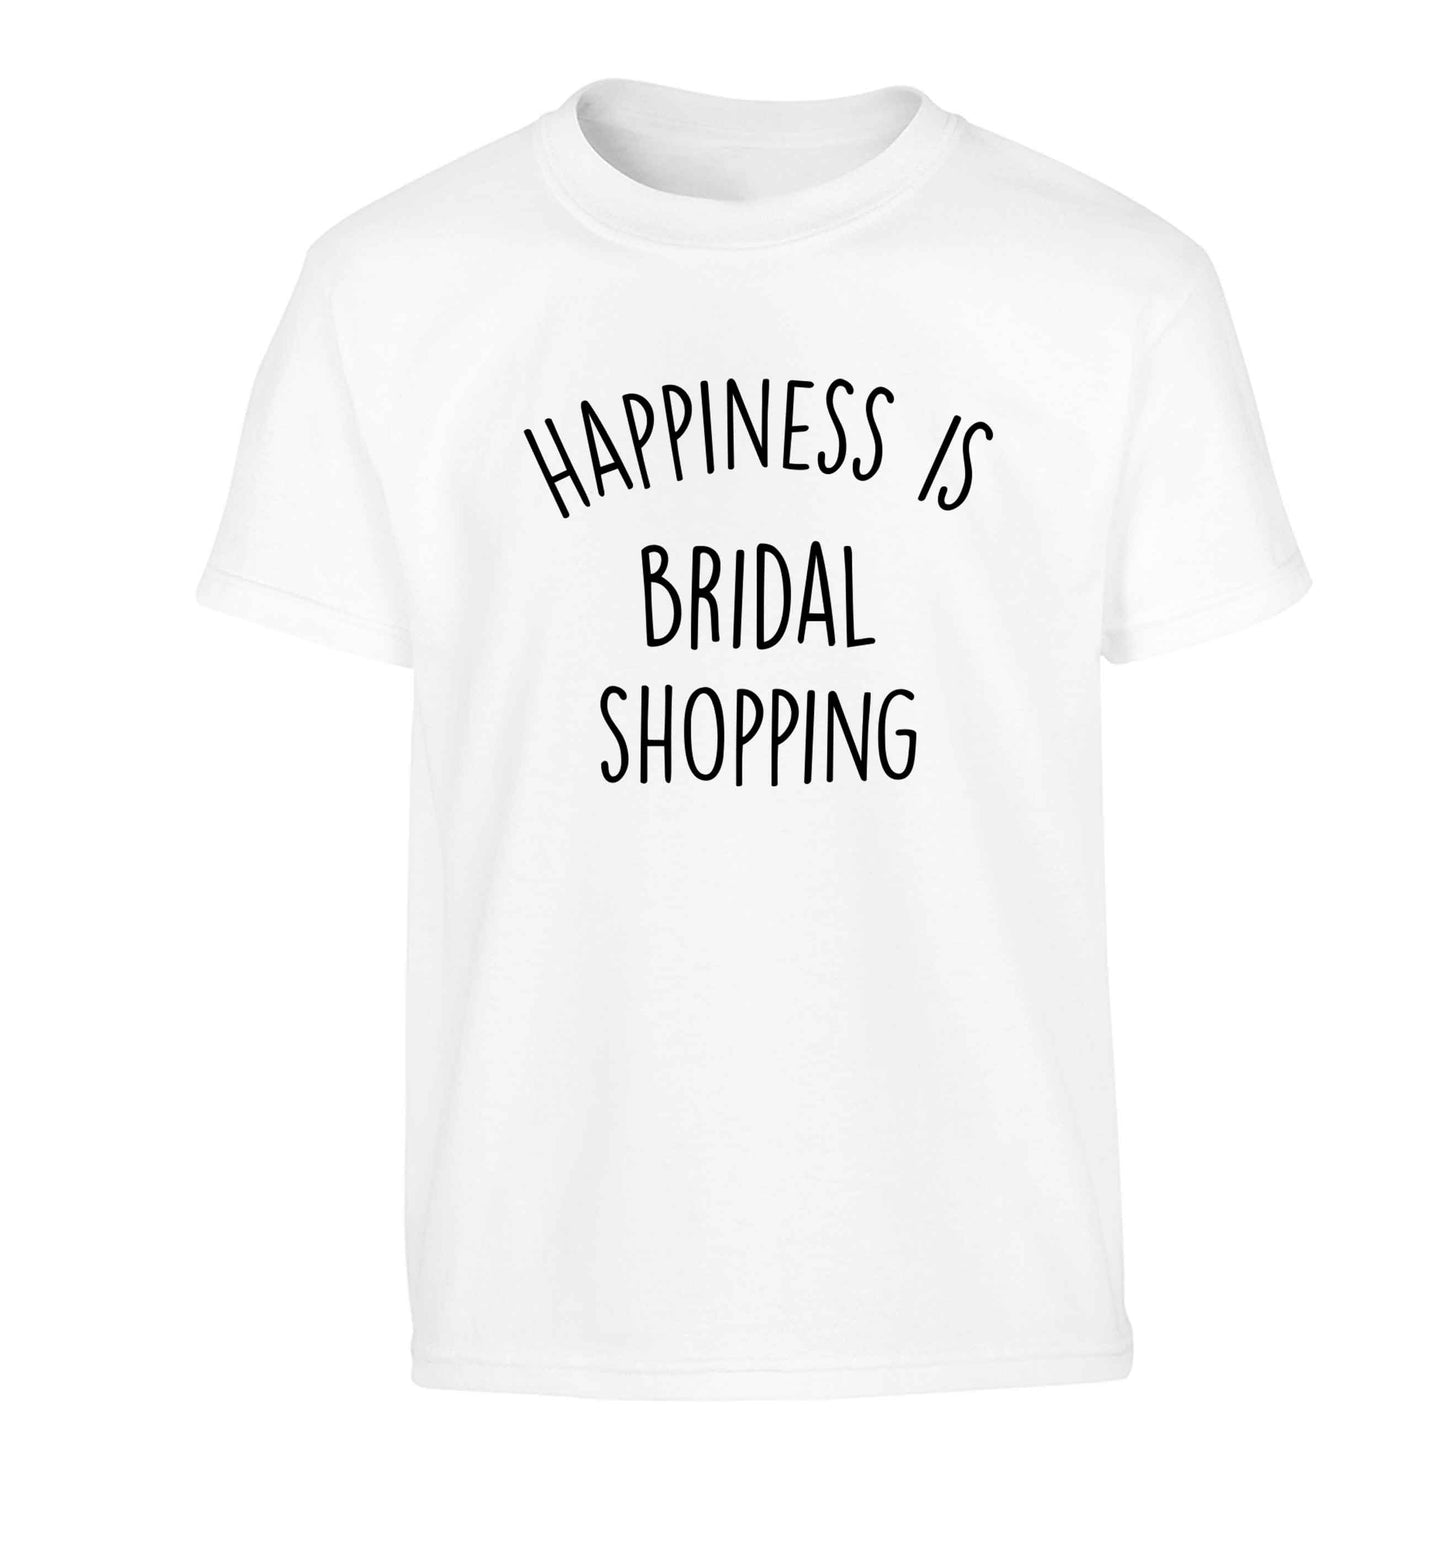 Happiness is bridal shopping Children's white Tshirt 12-13 Years